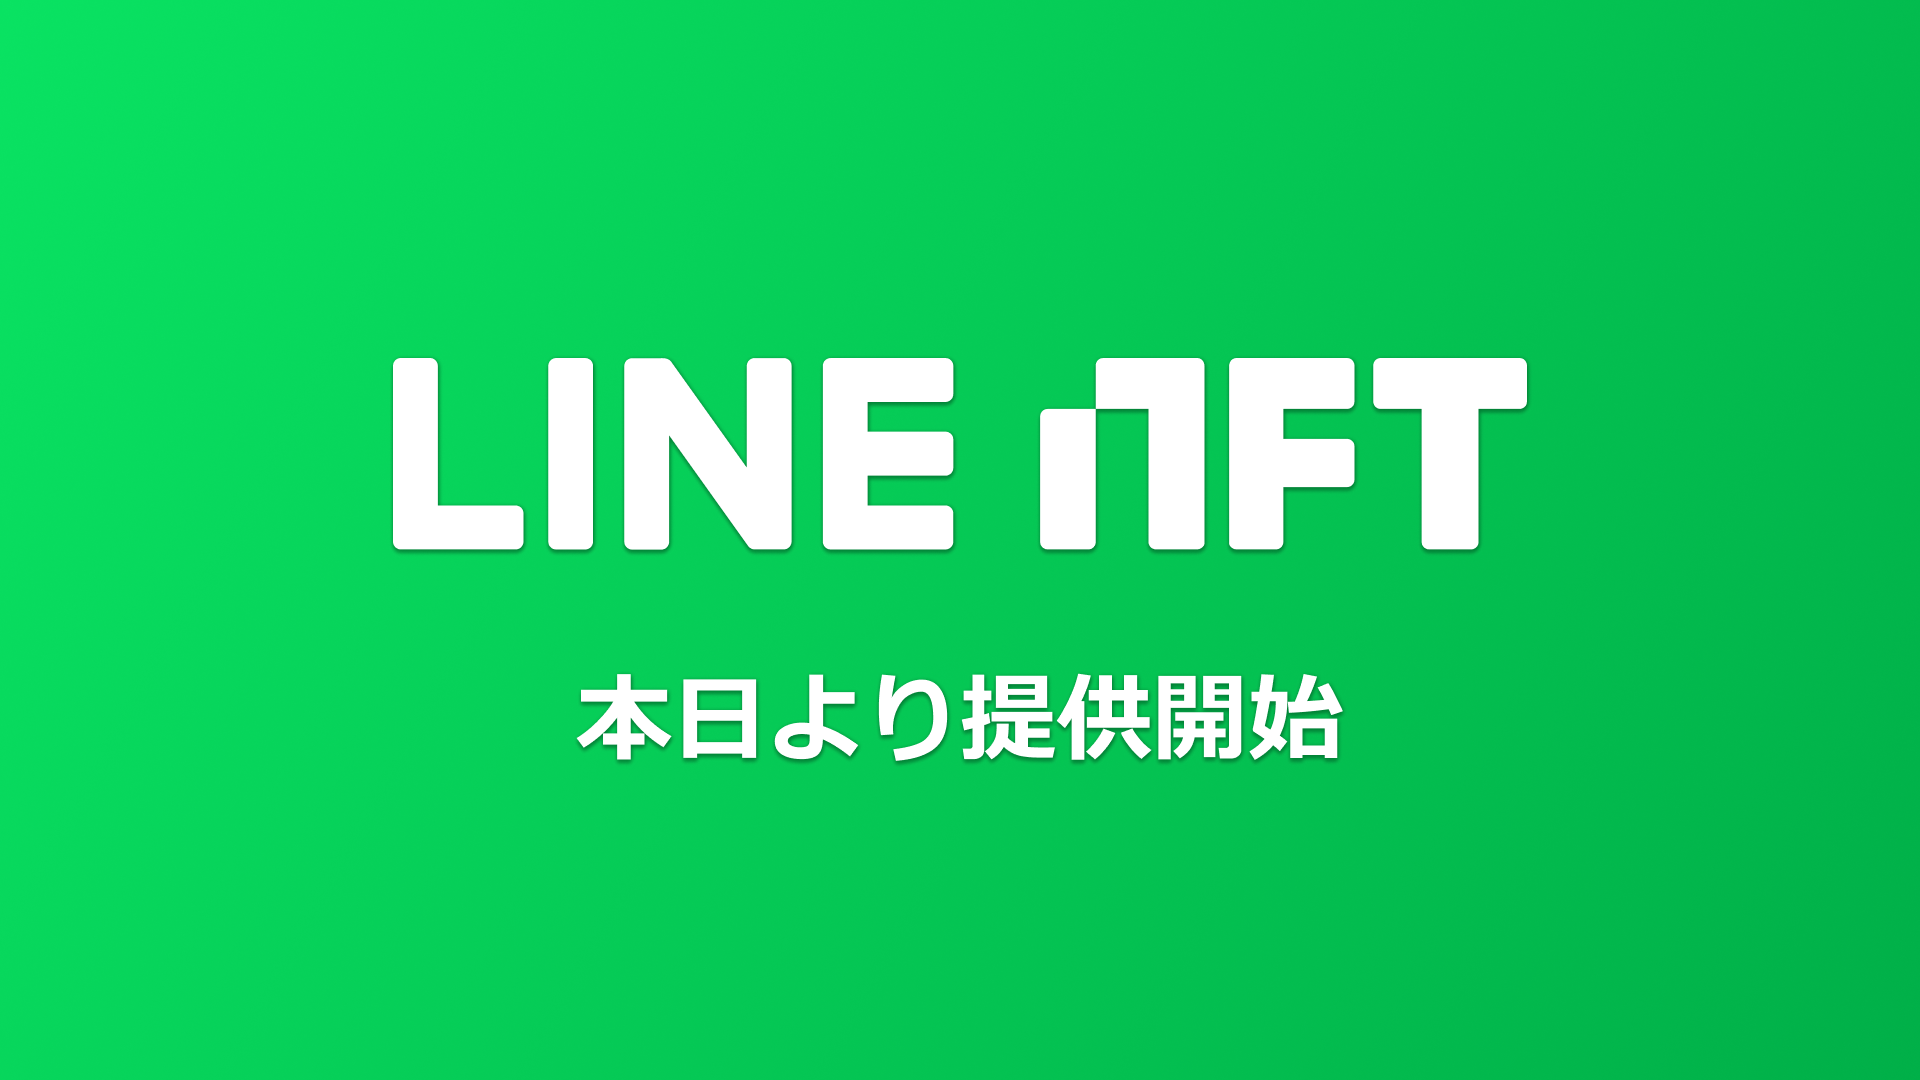 NFT総合マーケットプレイス「LINE NFT」 提供開始　総額1,000万円が当たる「NFTで宝くじキャンペーン」を開催